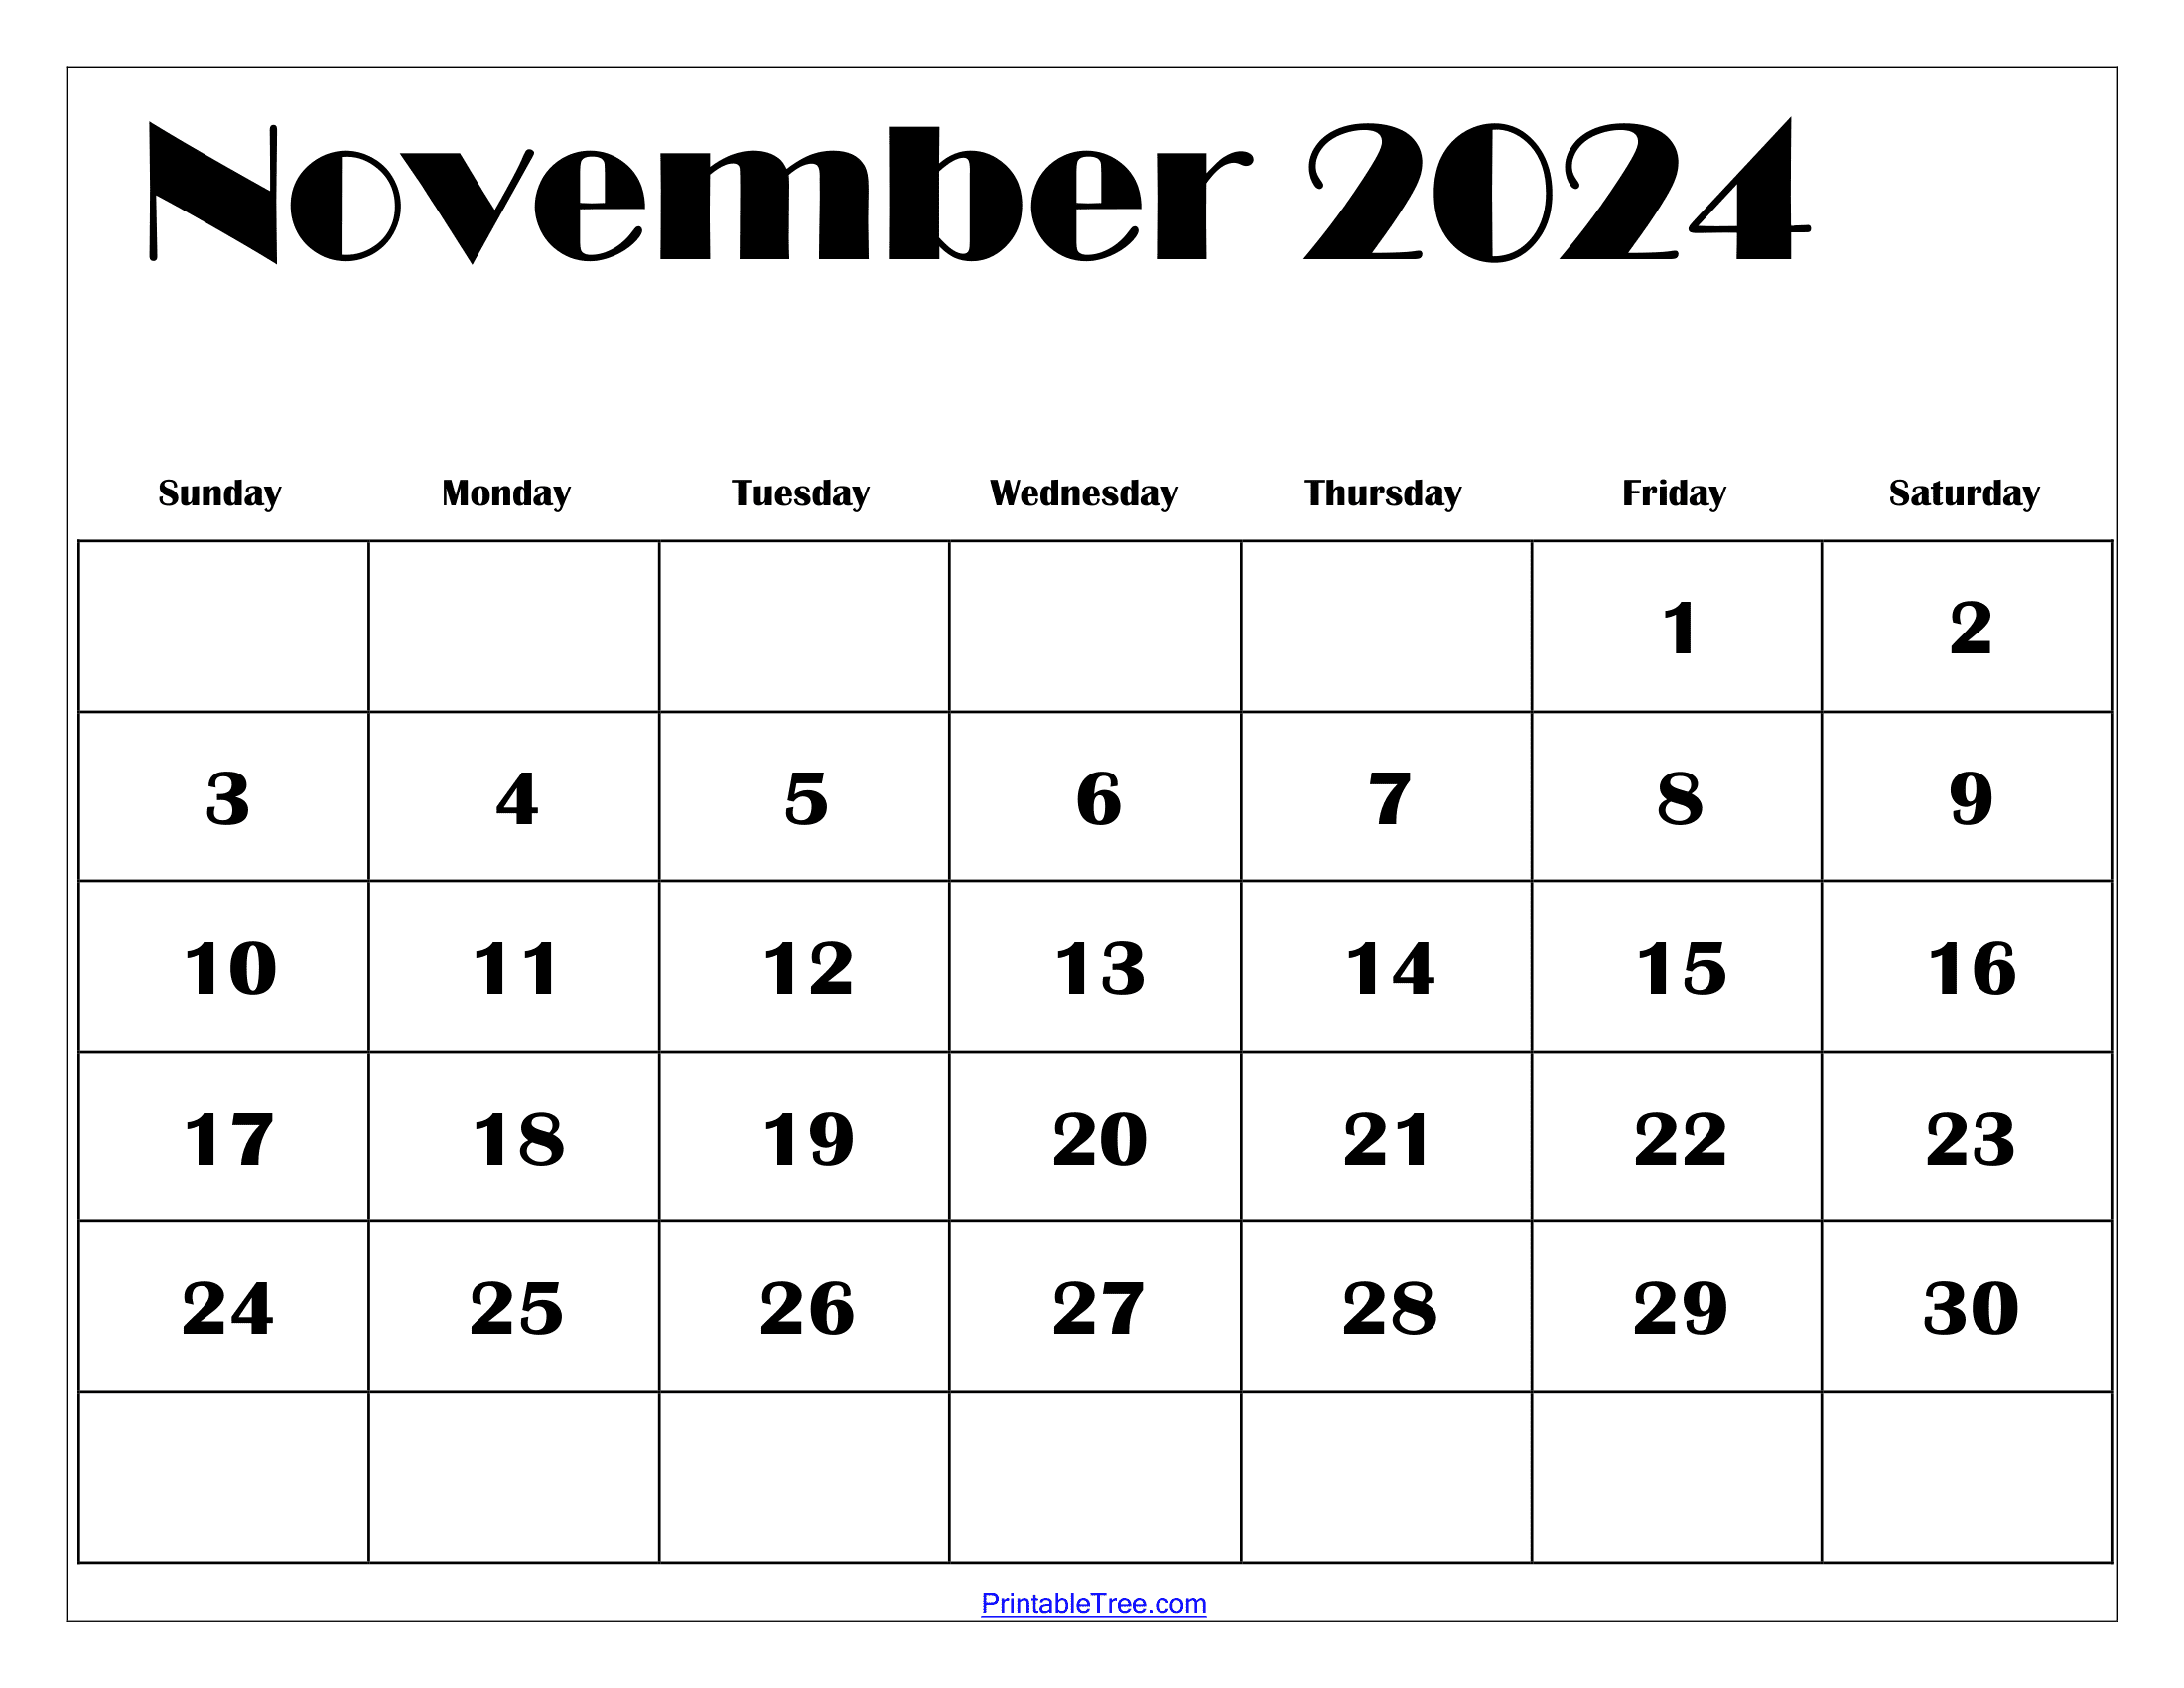 November 2024 Calendar Printable Pdf Template With Holidays for Free Printable Calendar 2024 November